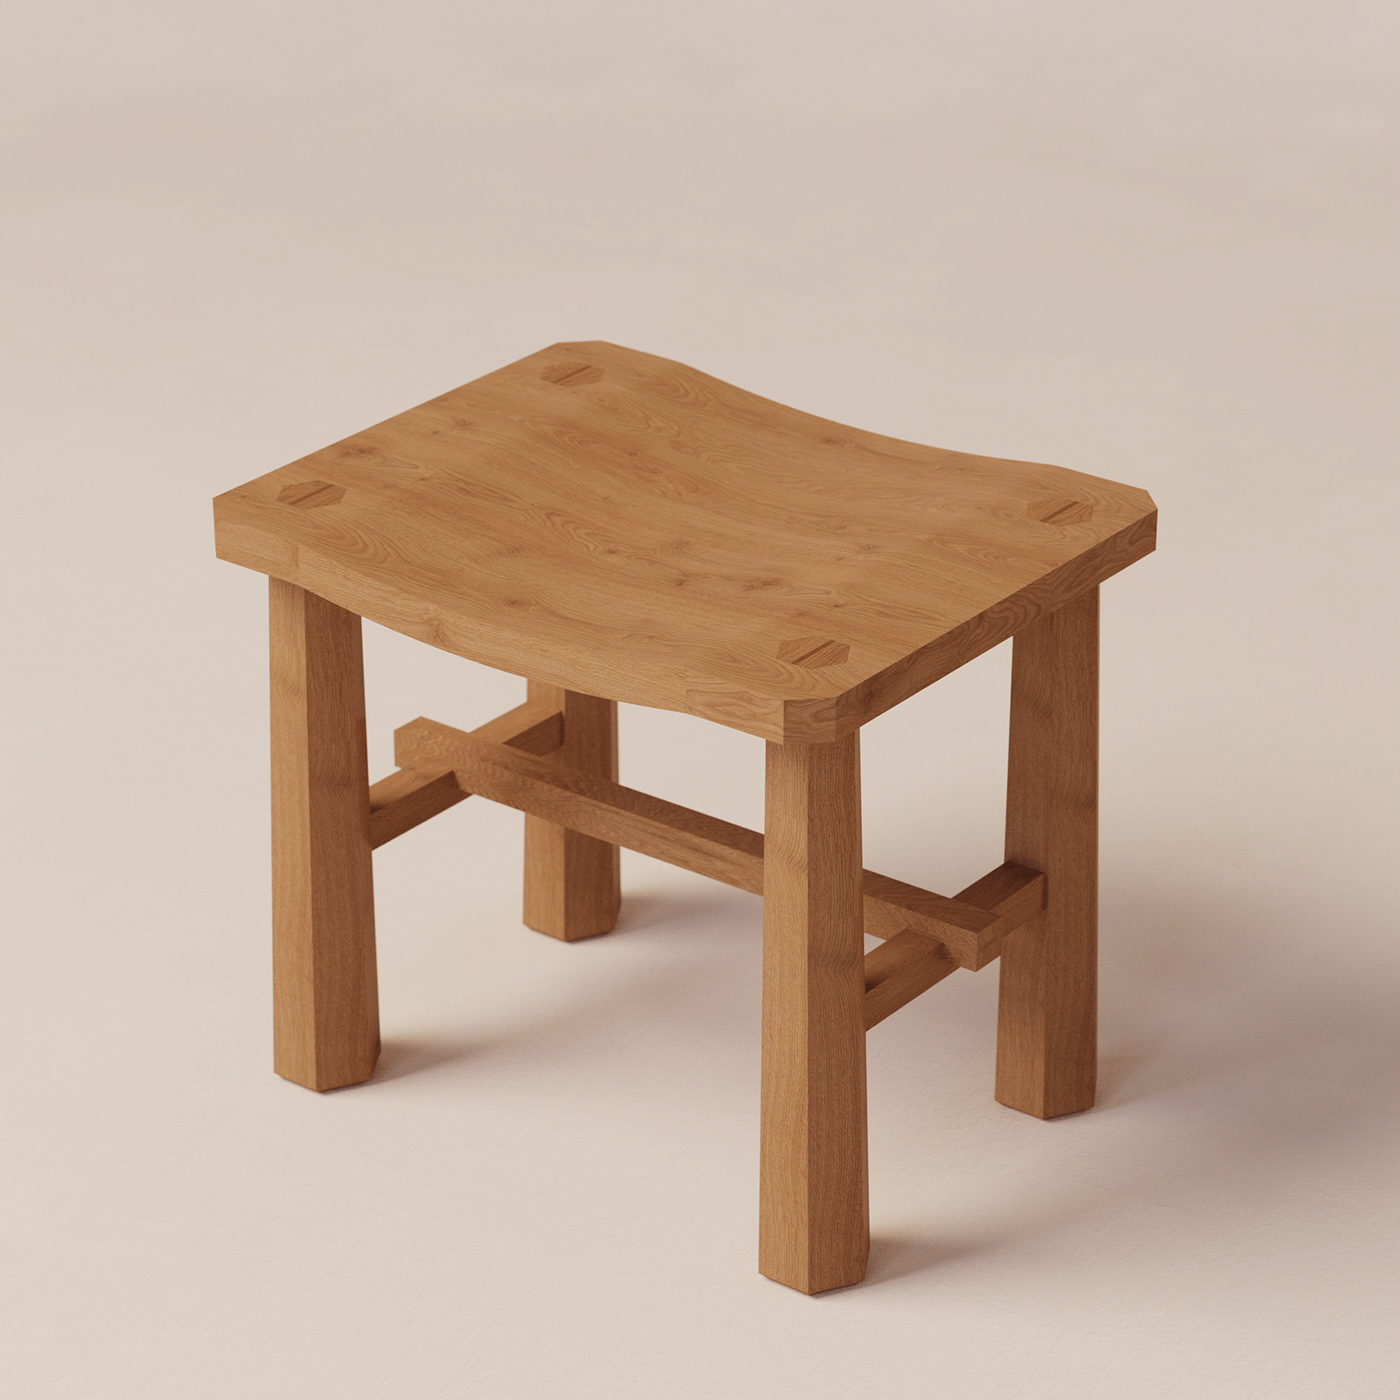 stool design furniture design  industrial product design  Render architecture wood interior design  modern